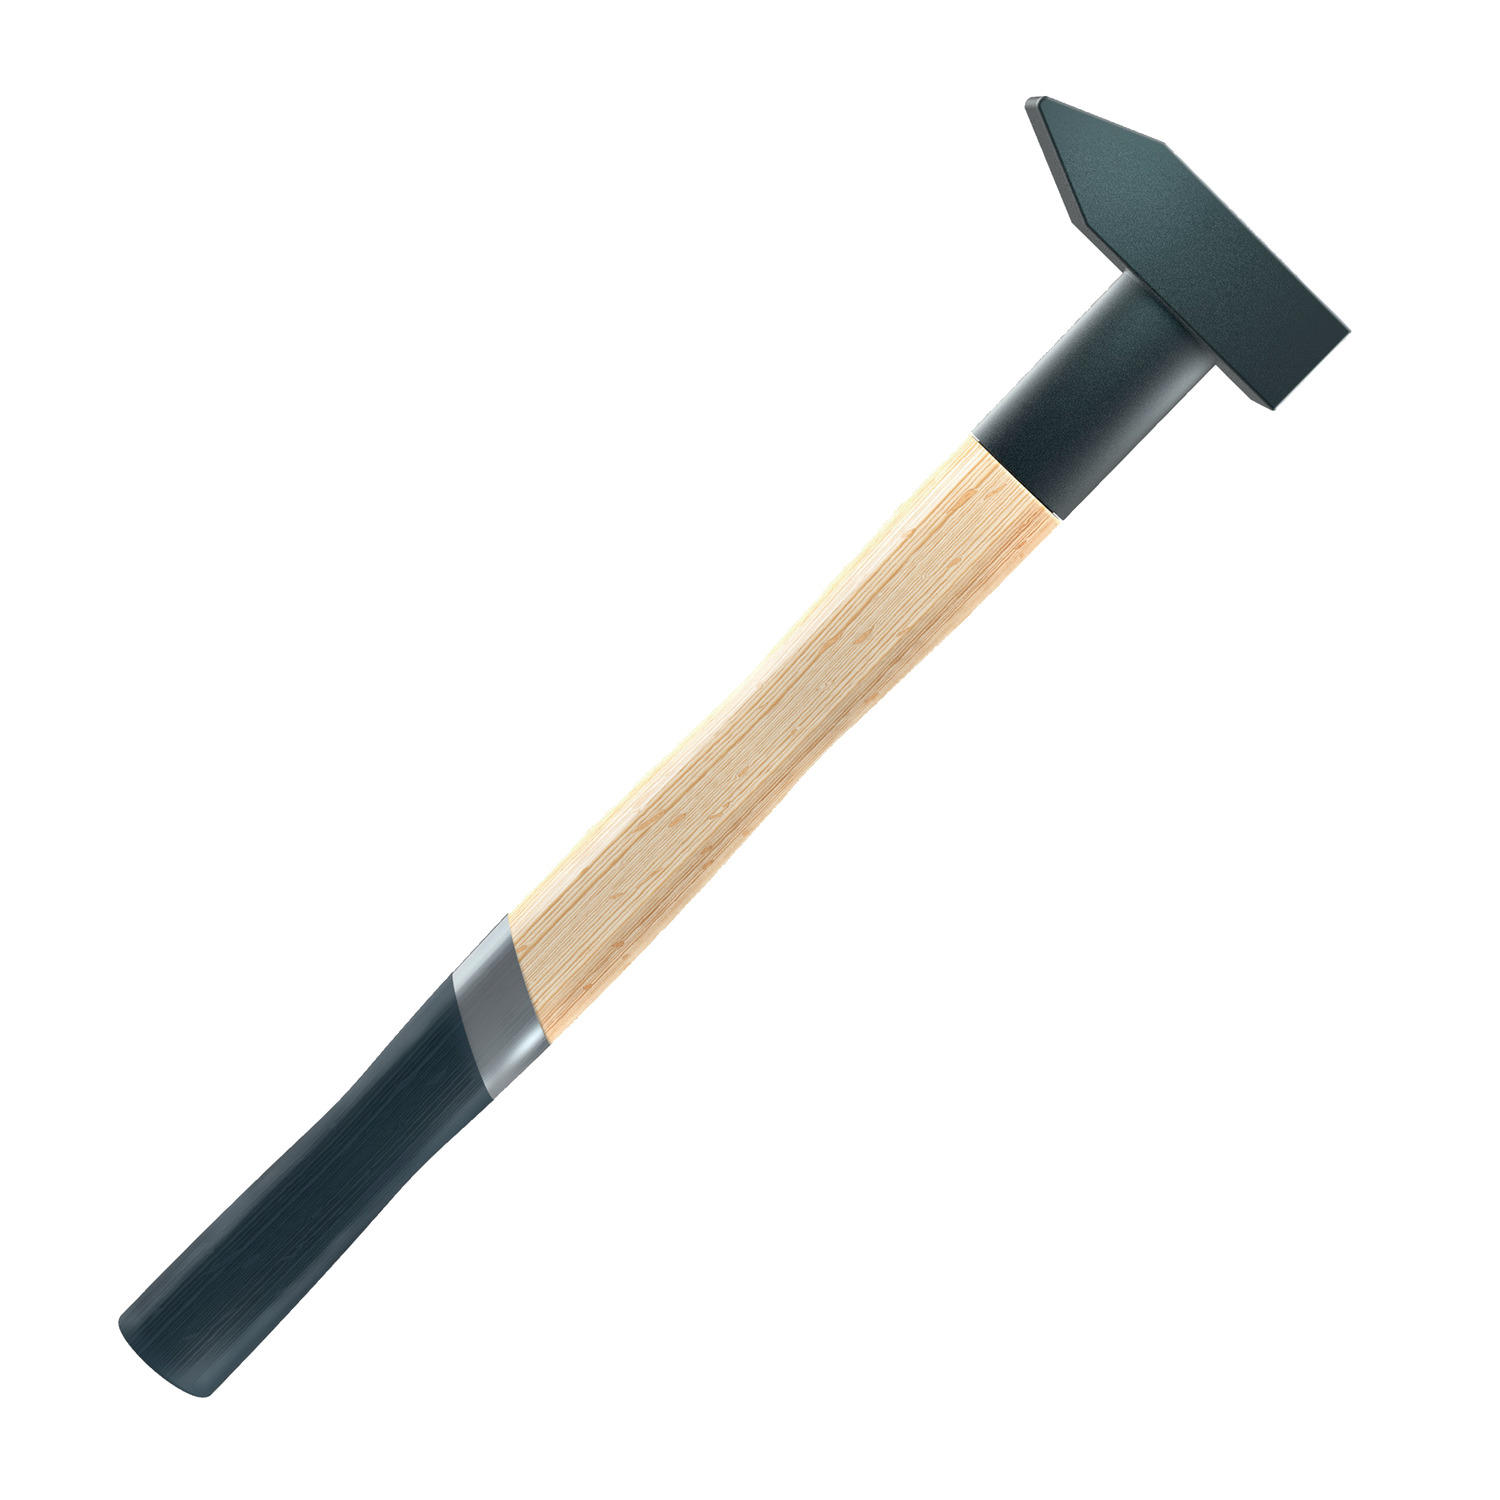 98501 - Maxx Craft Hammer - Complete